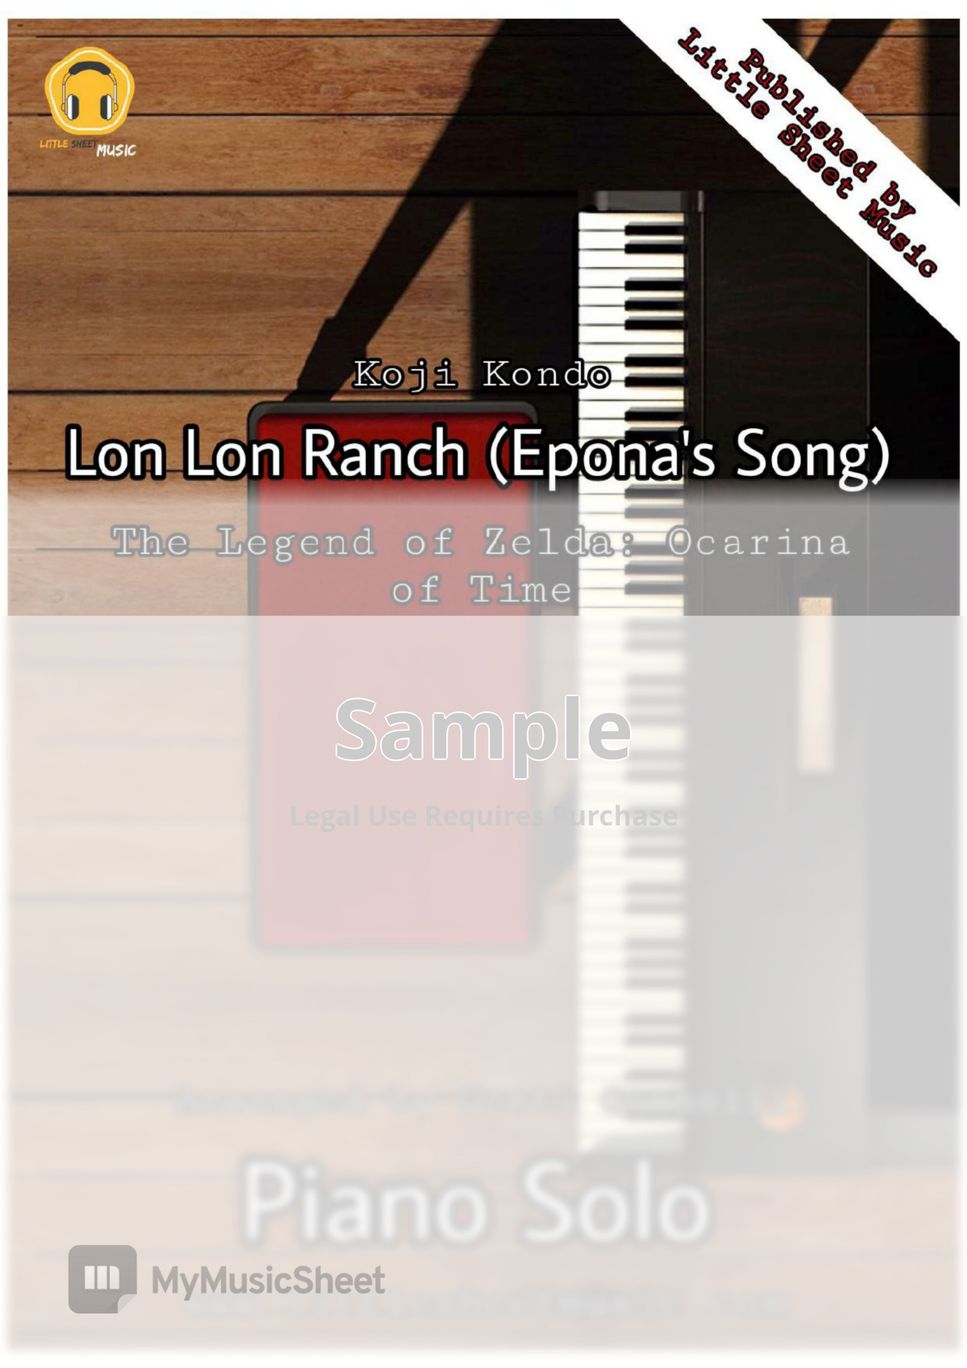 Koji Kondo - Lon Lon Ranch (Epona's Song) - The Legend of Zelda: Ocarina of Time by Genti Guxholli